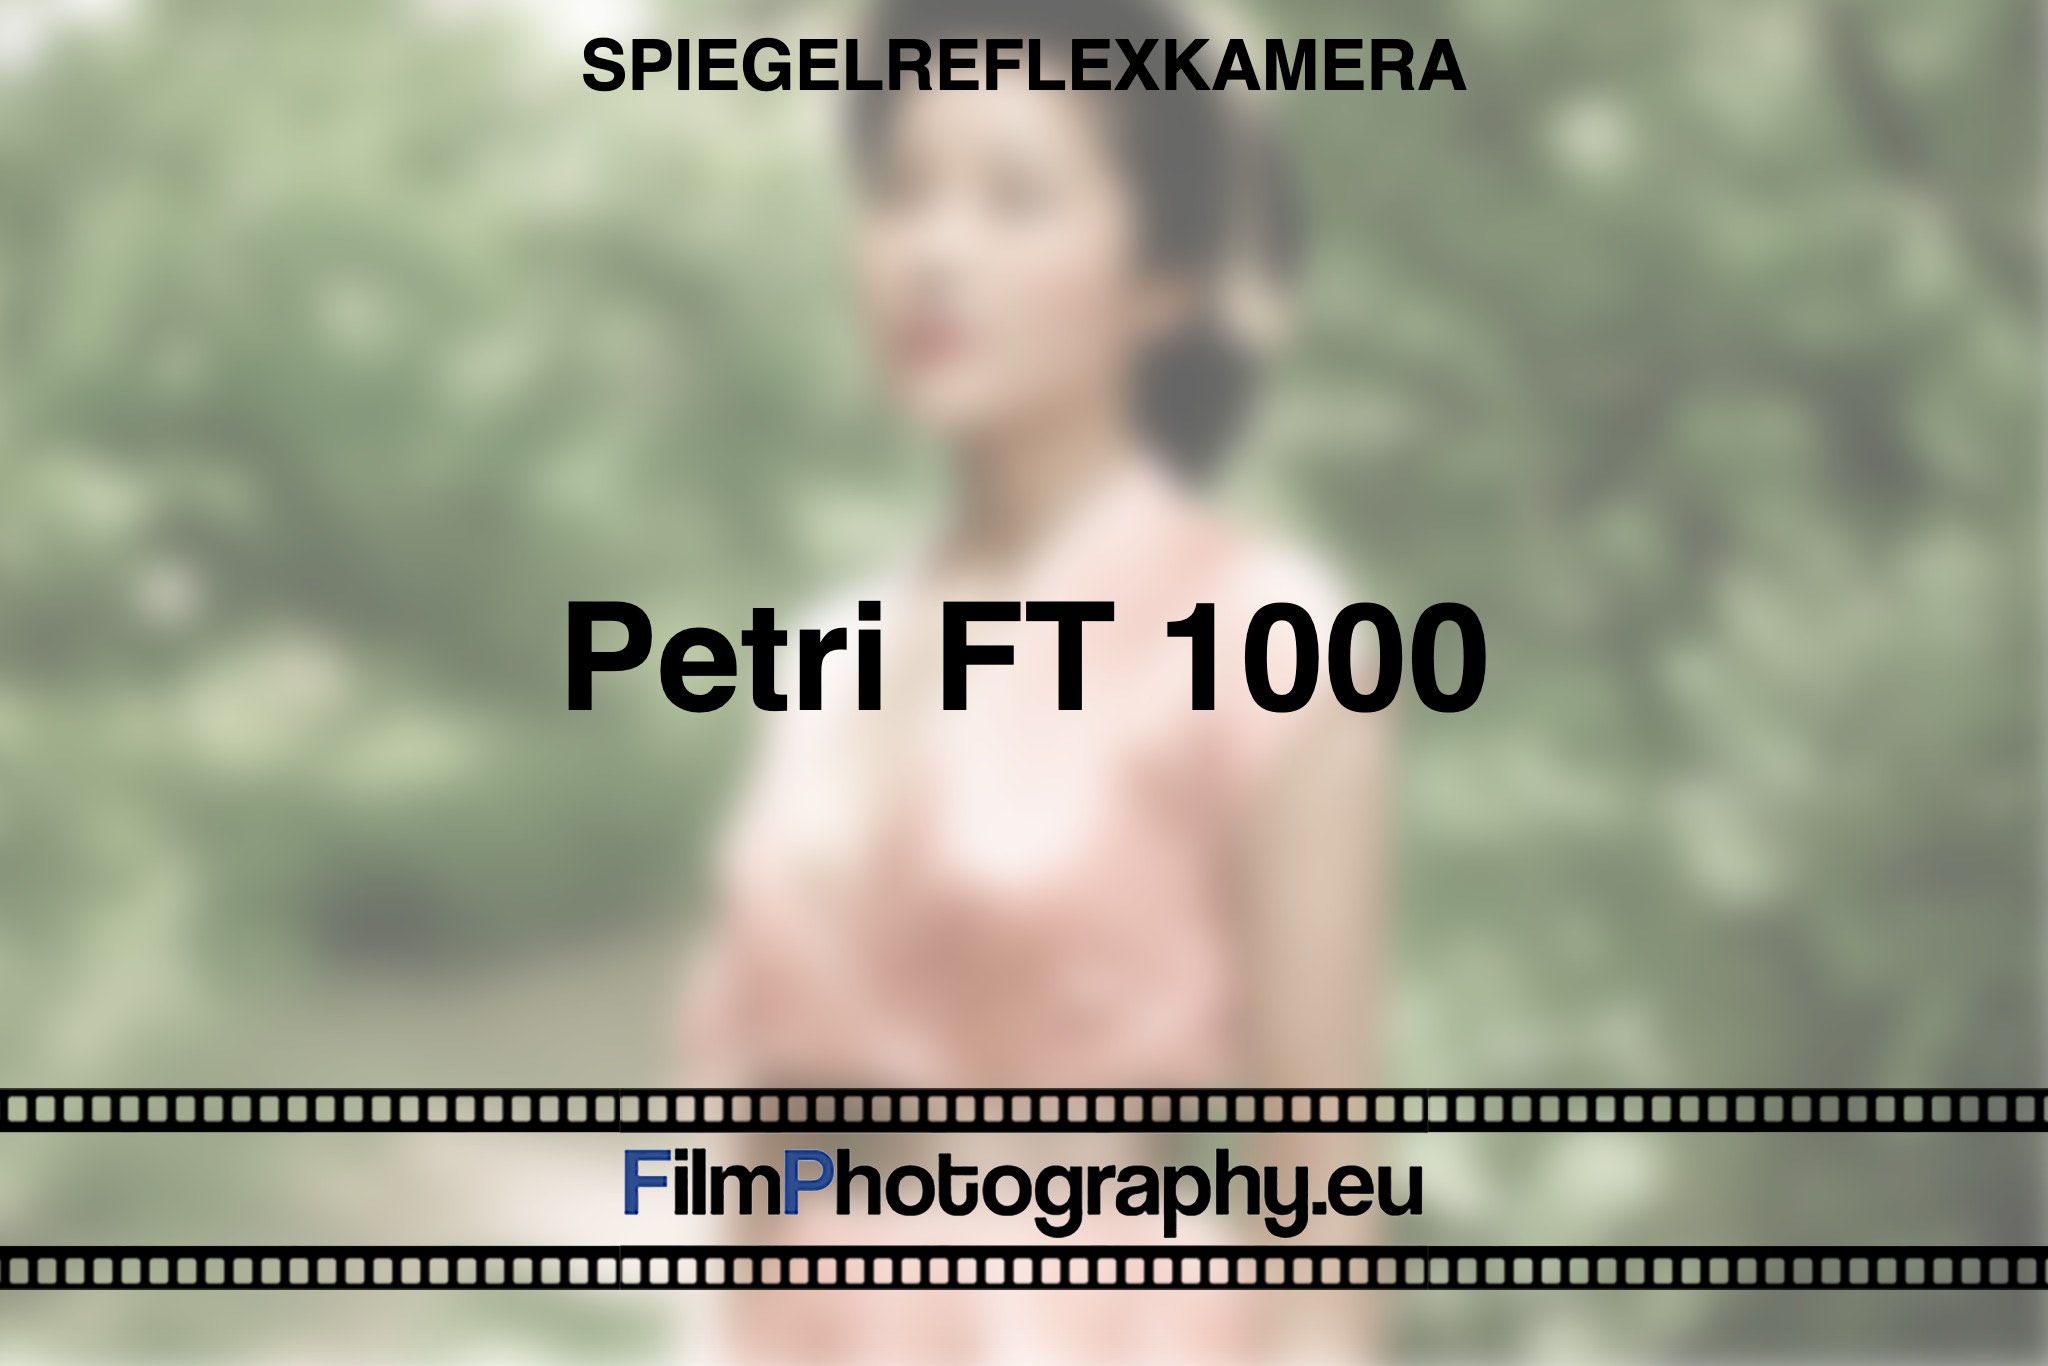 petri-ft-1000-spiegelreflexkamera-bnv